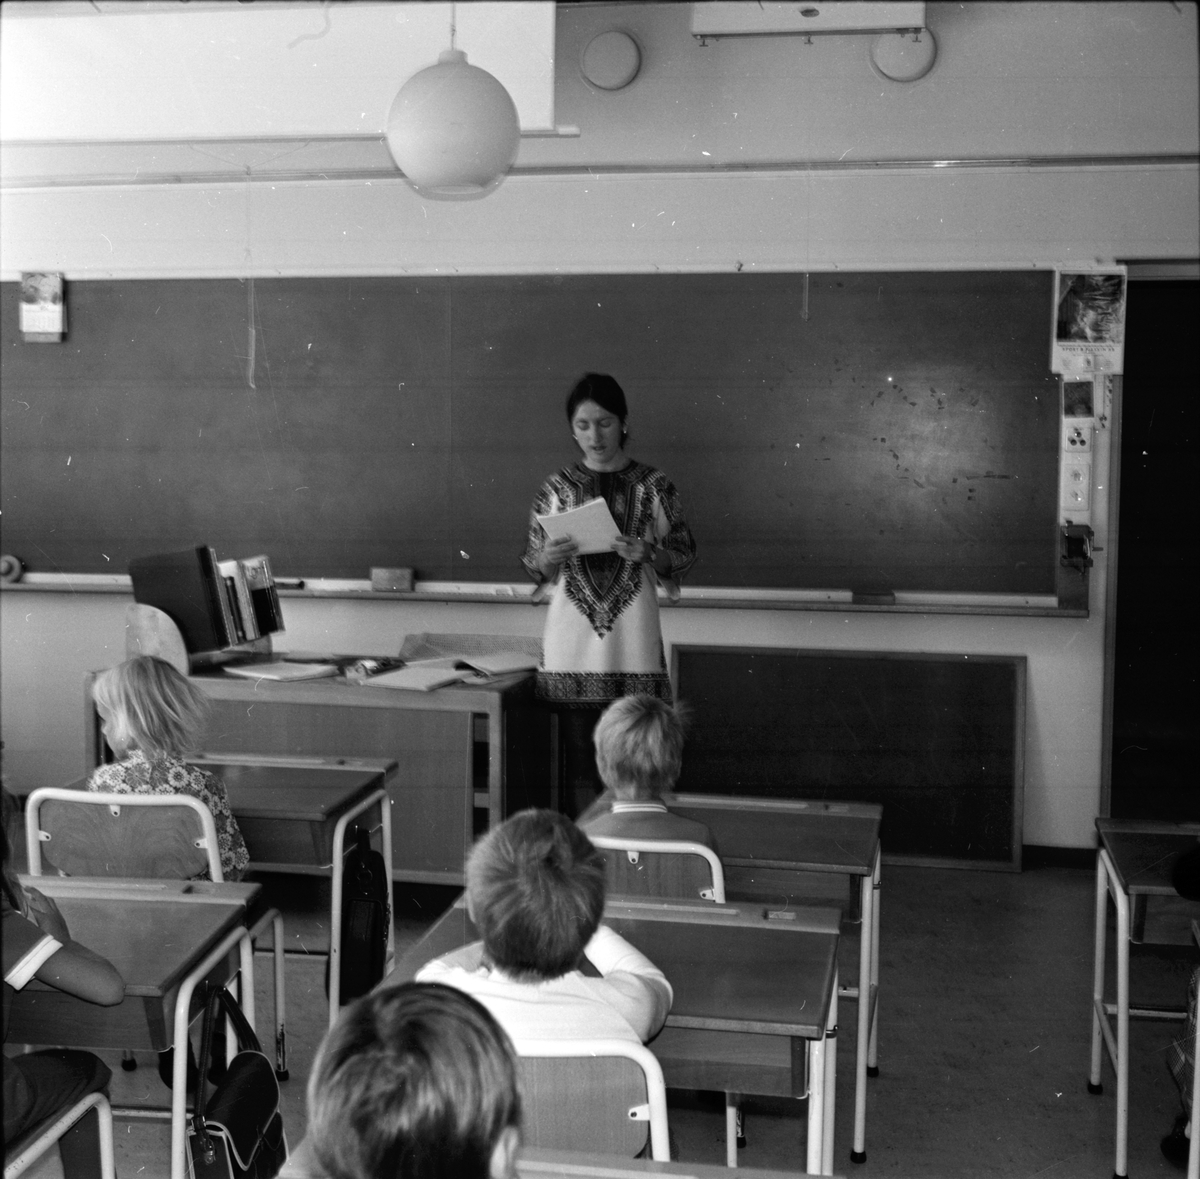 Arbrå,
Skolan börjar ht. aug,
1971